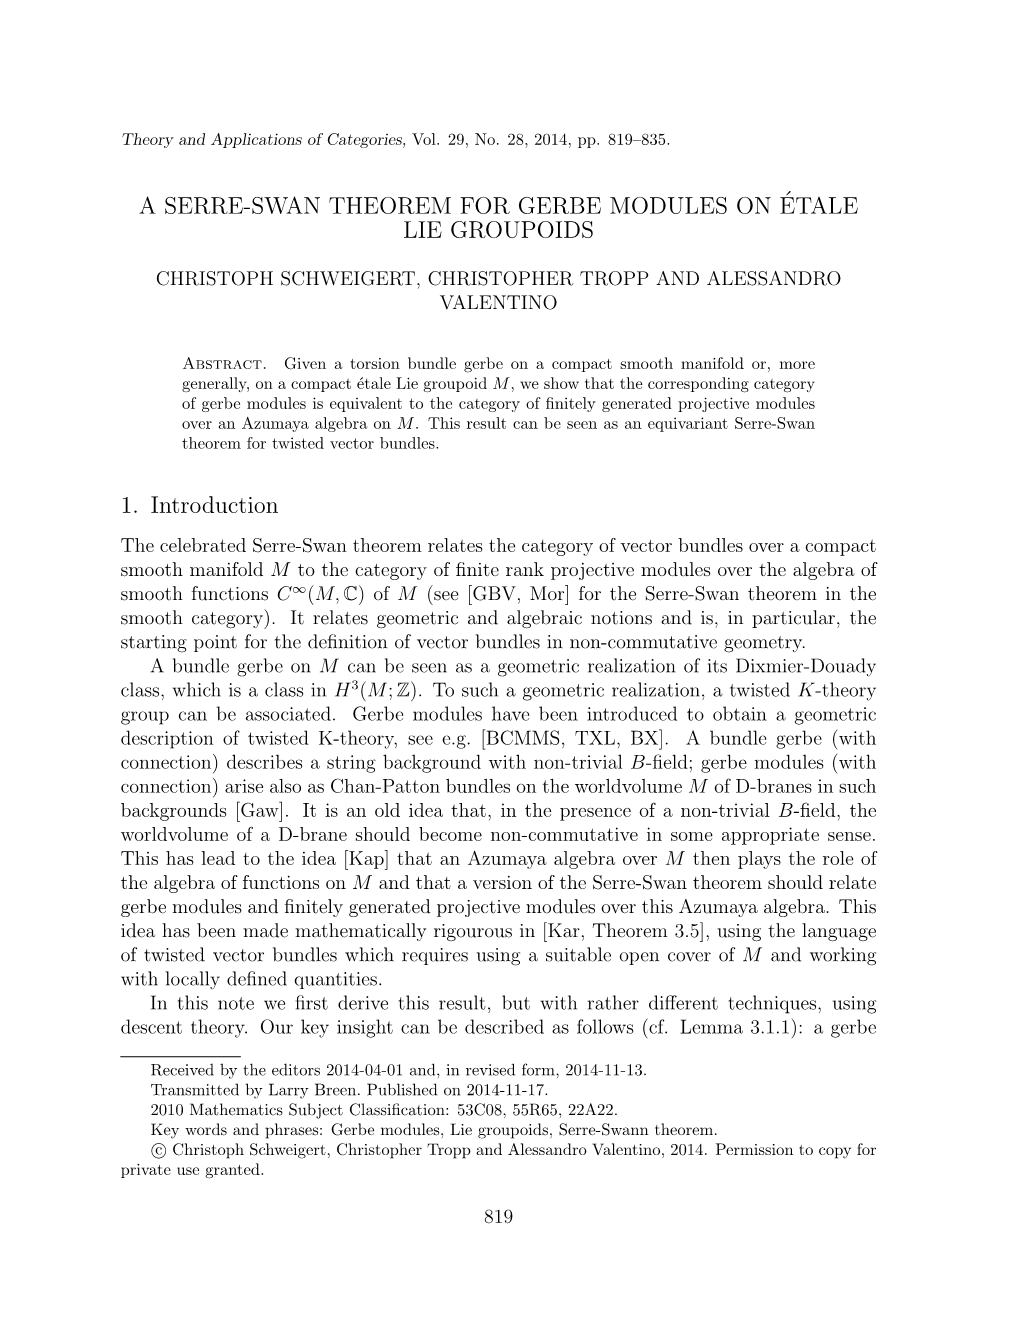 A Serre-Swan Theorem for Gerbe Modules Onétale Lie Groupoids